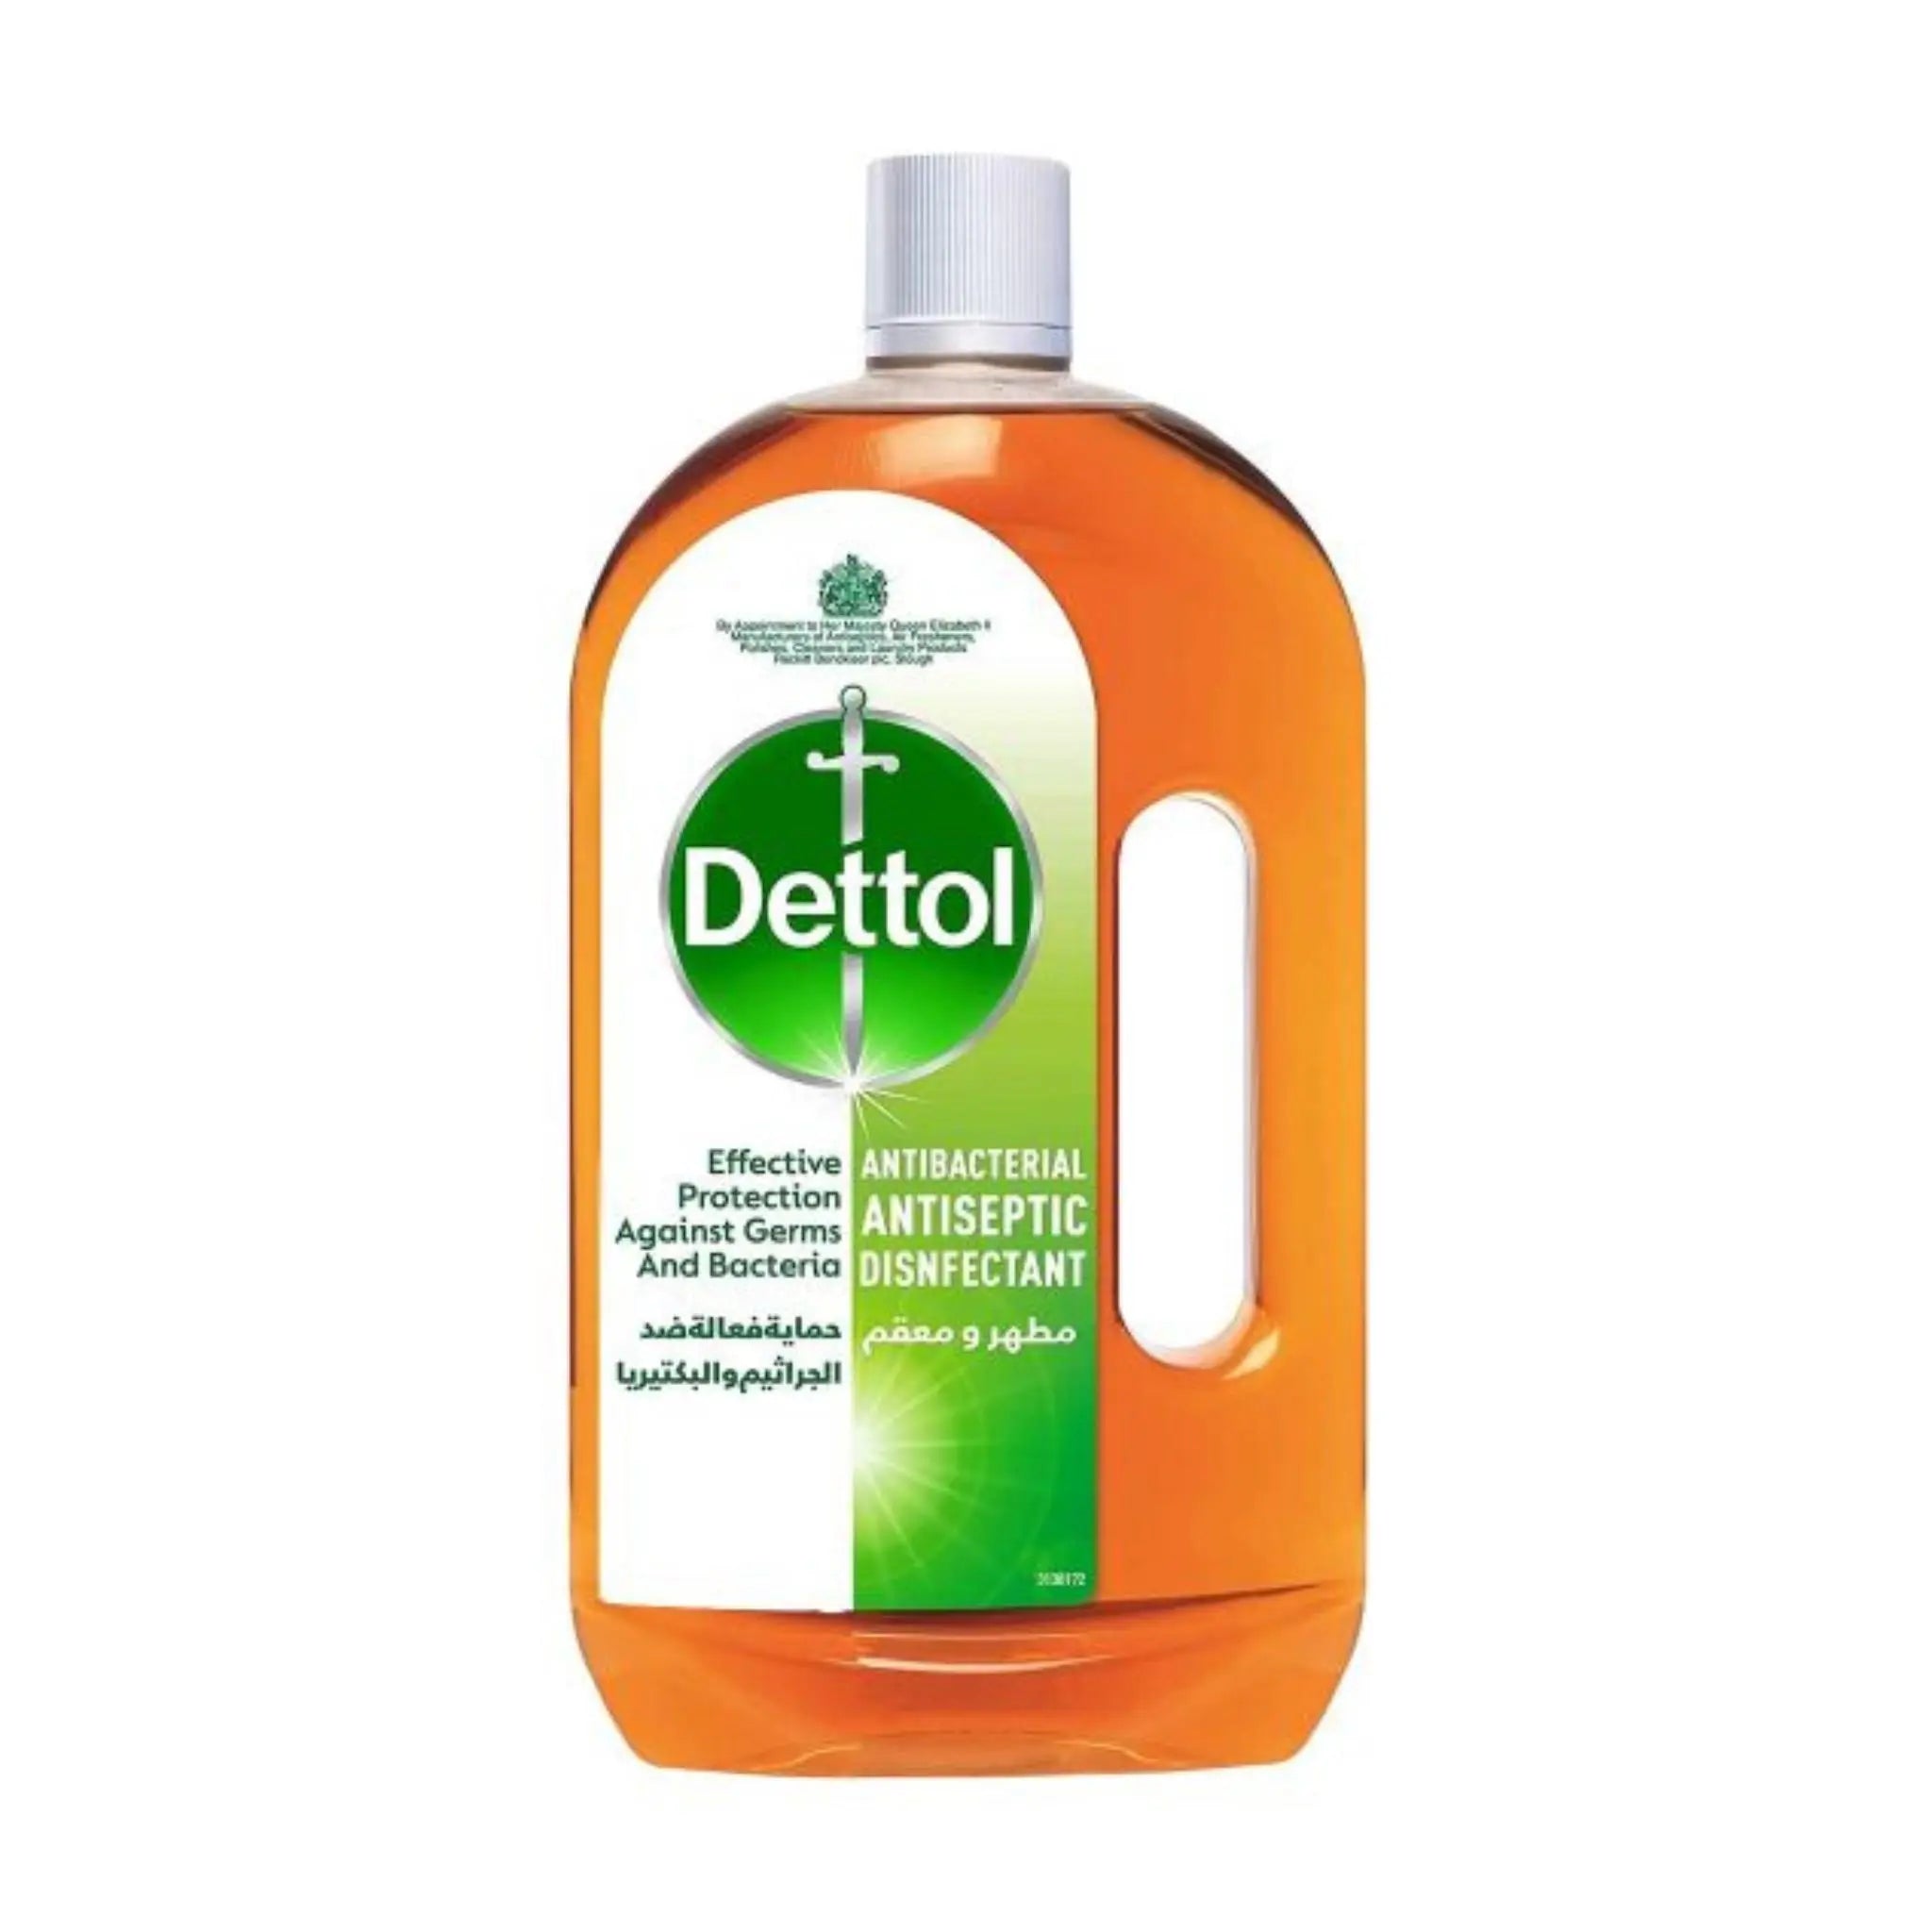 DETTOL Anti-Bacterial & Anti-Septic Liquid 1000ML - 2x6 sets (1 carton) Marino.AE